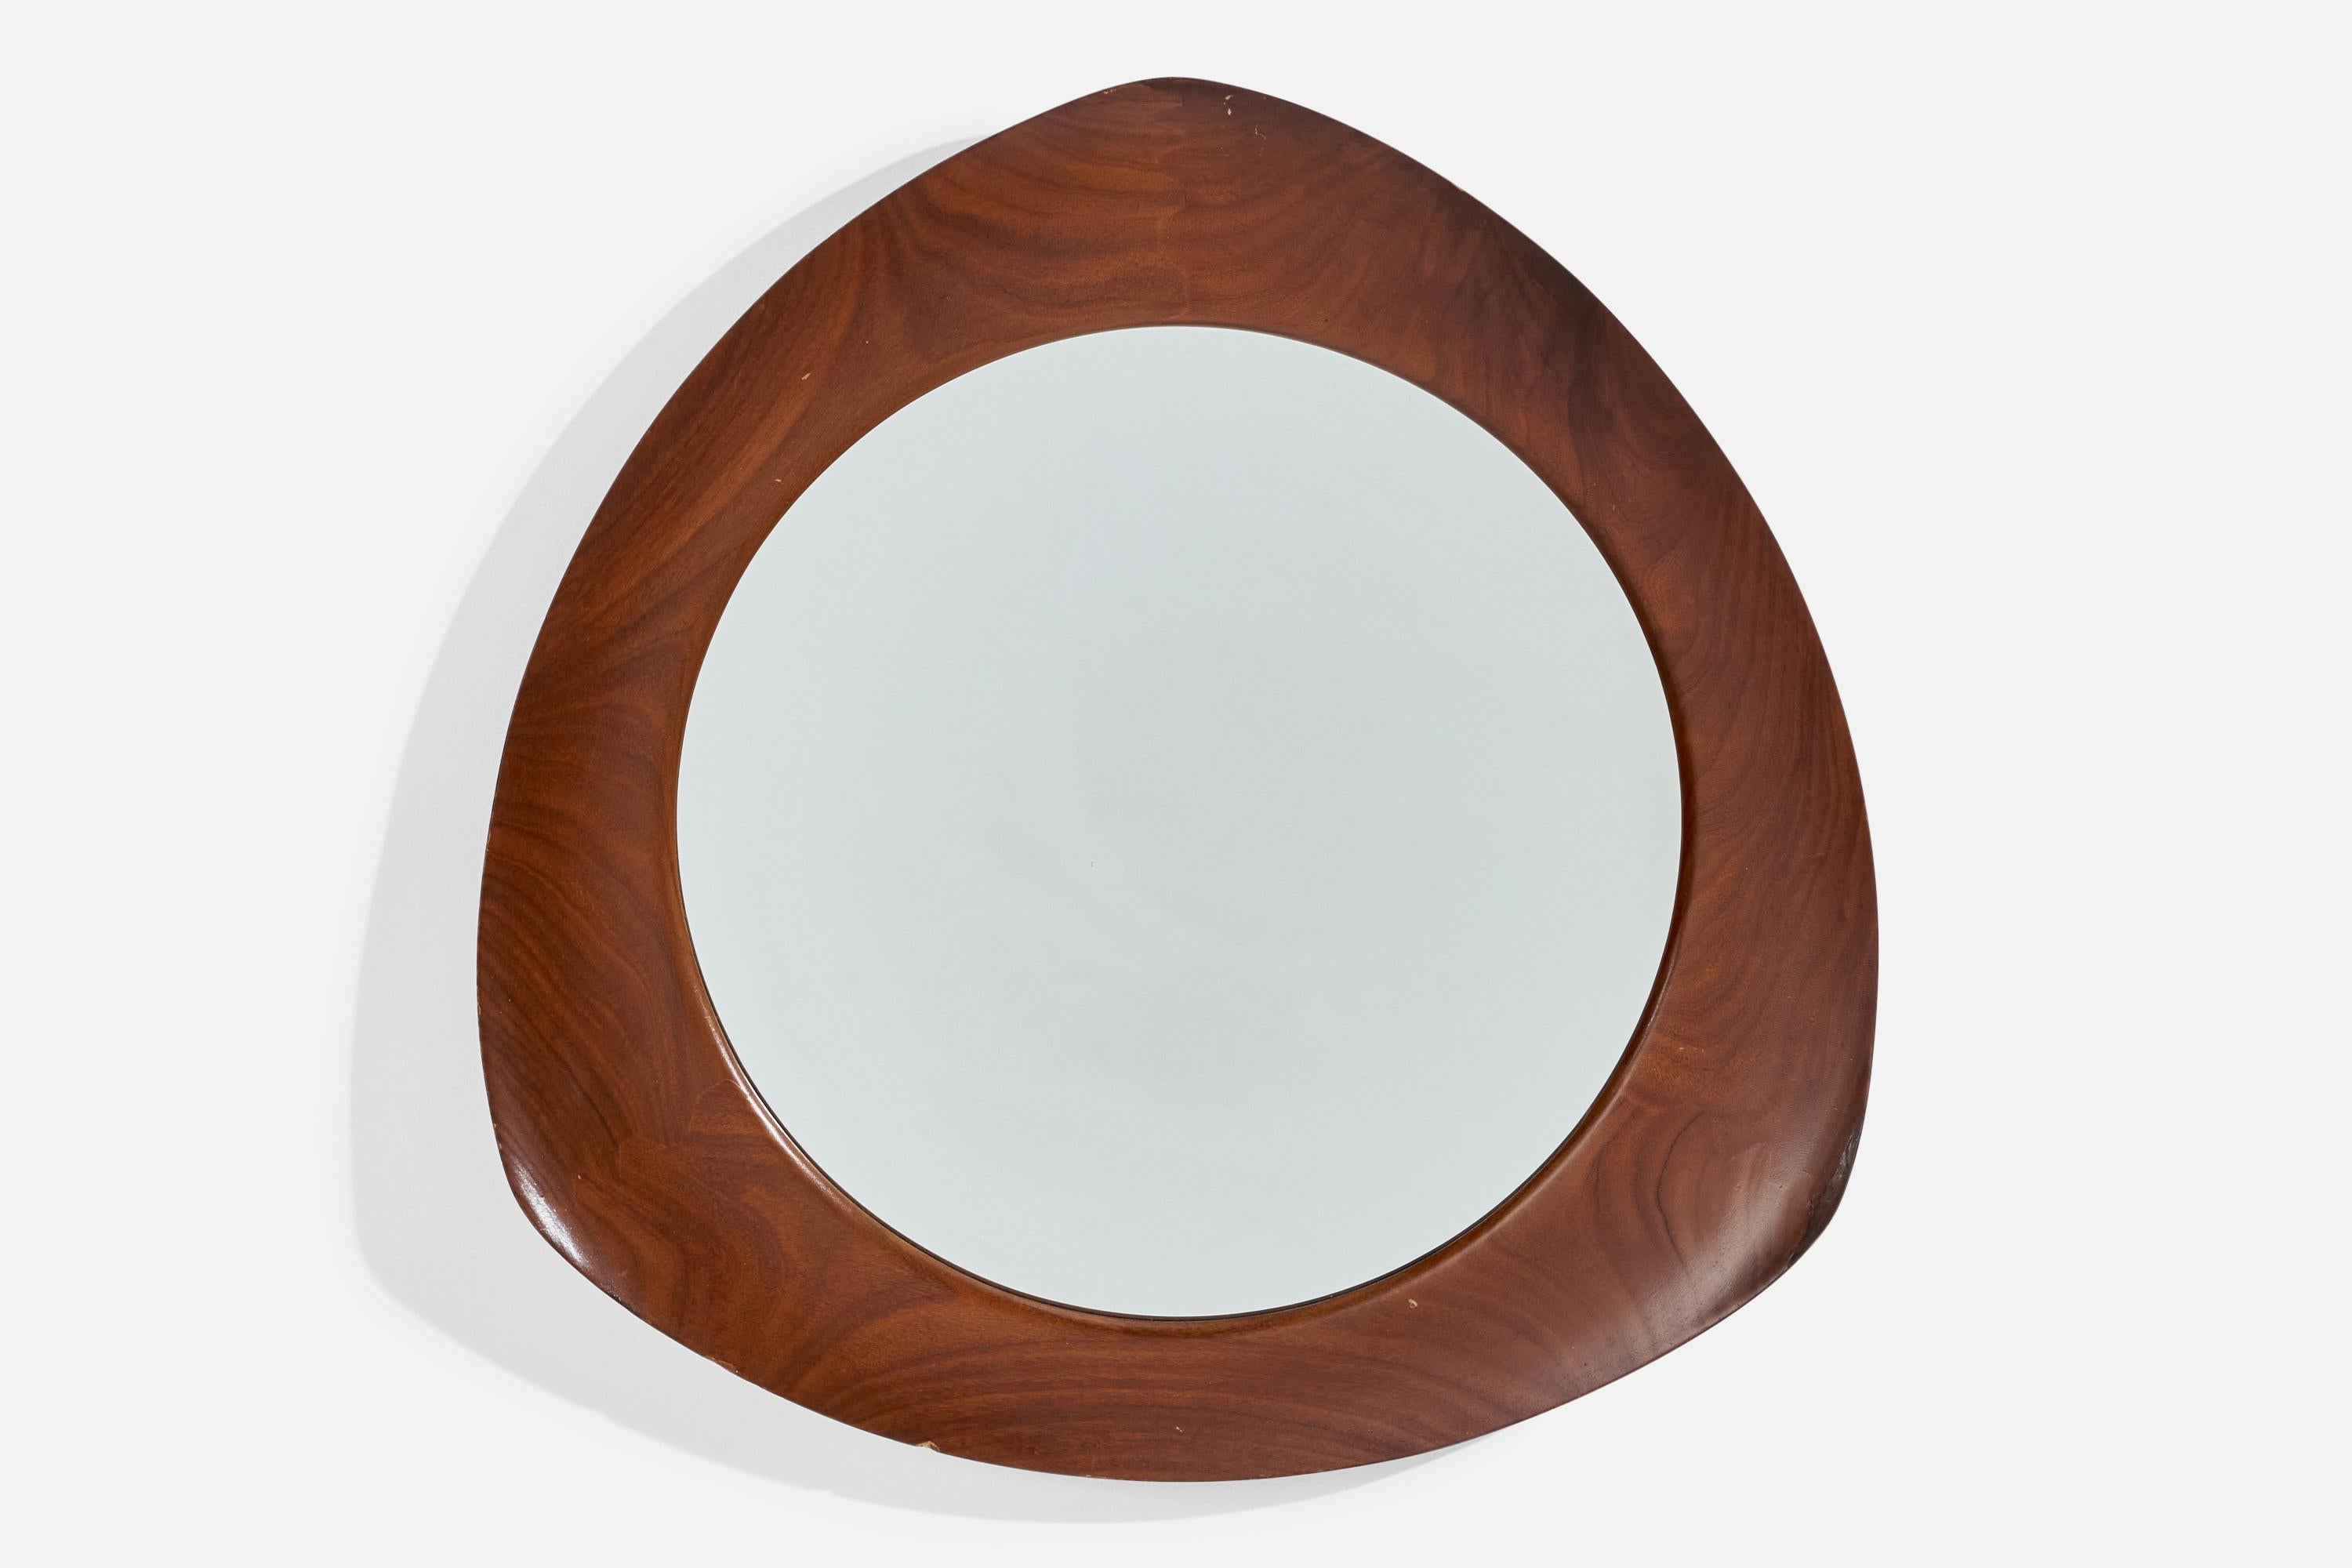 A walnut wall mirror designed and produced by Franco Campo & Carlo Graffi, Italy, 1950s.

